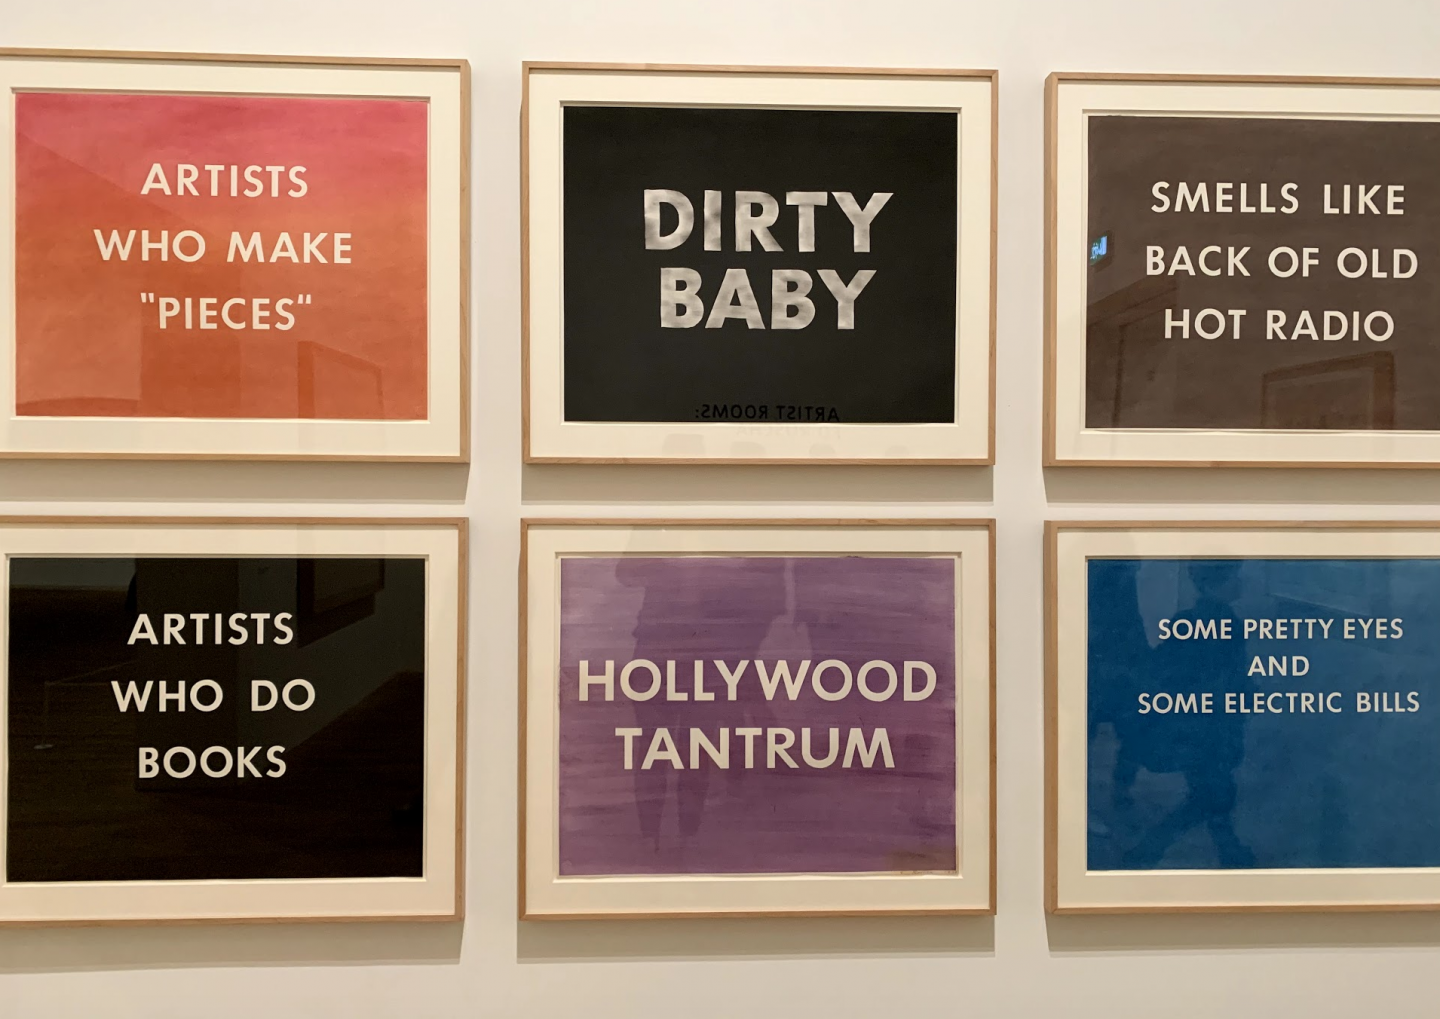 Works by Edward Ruscha at Tate Modern, London